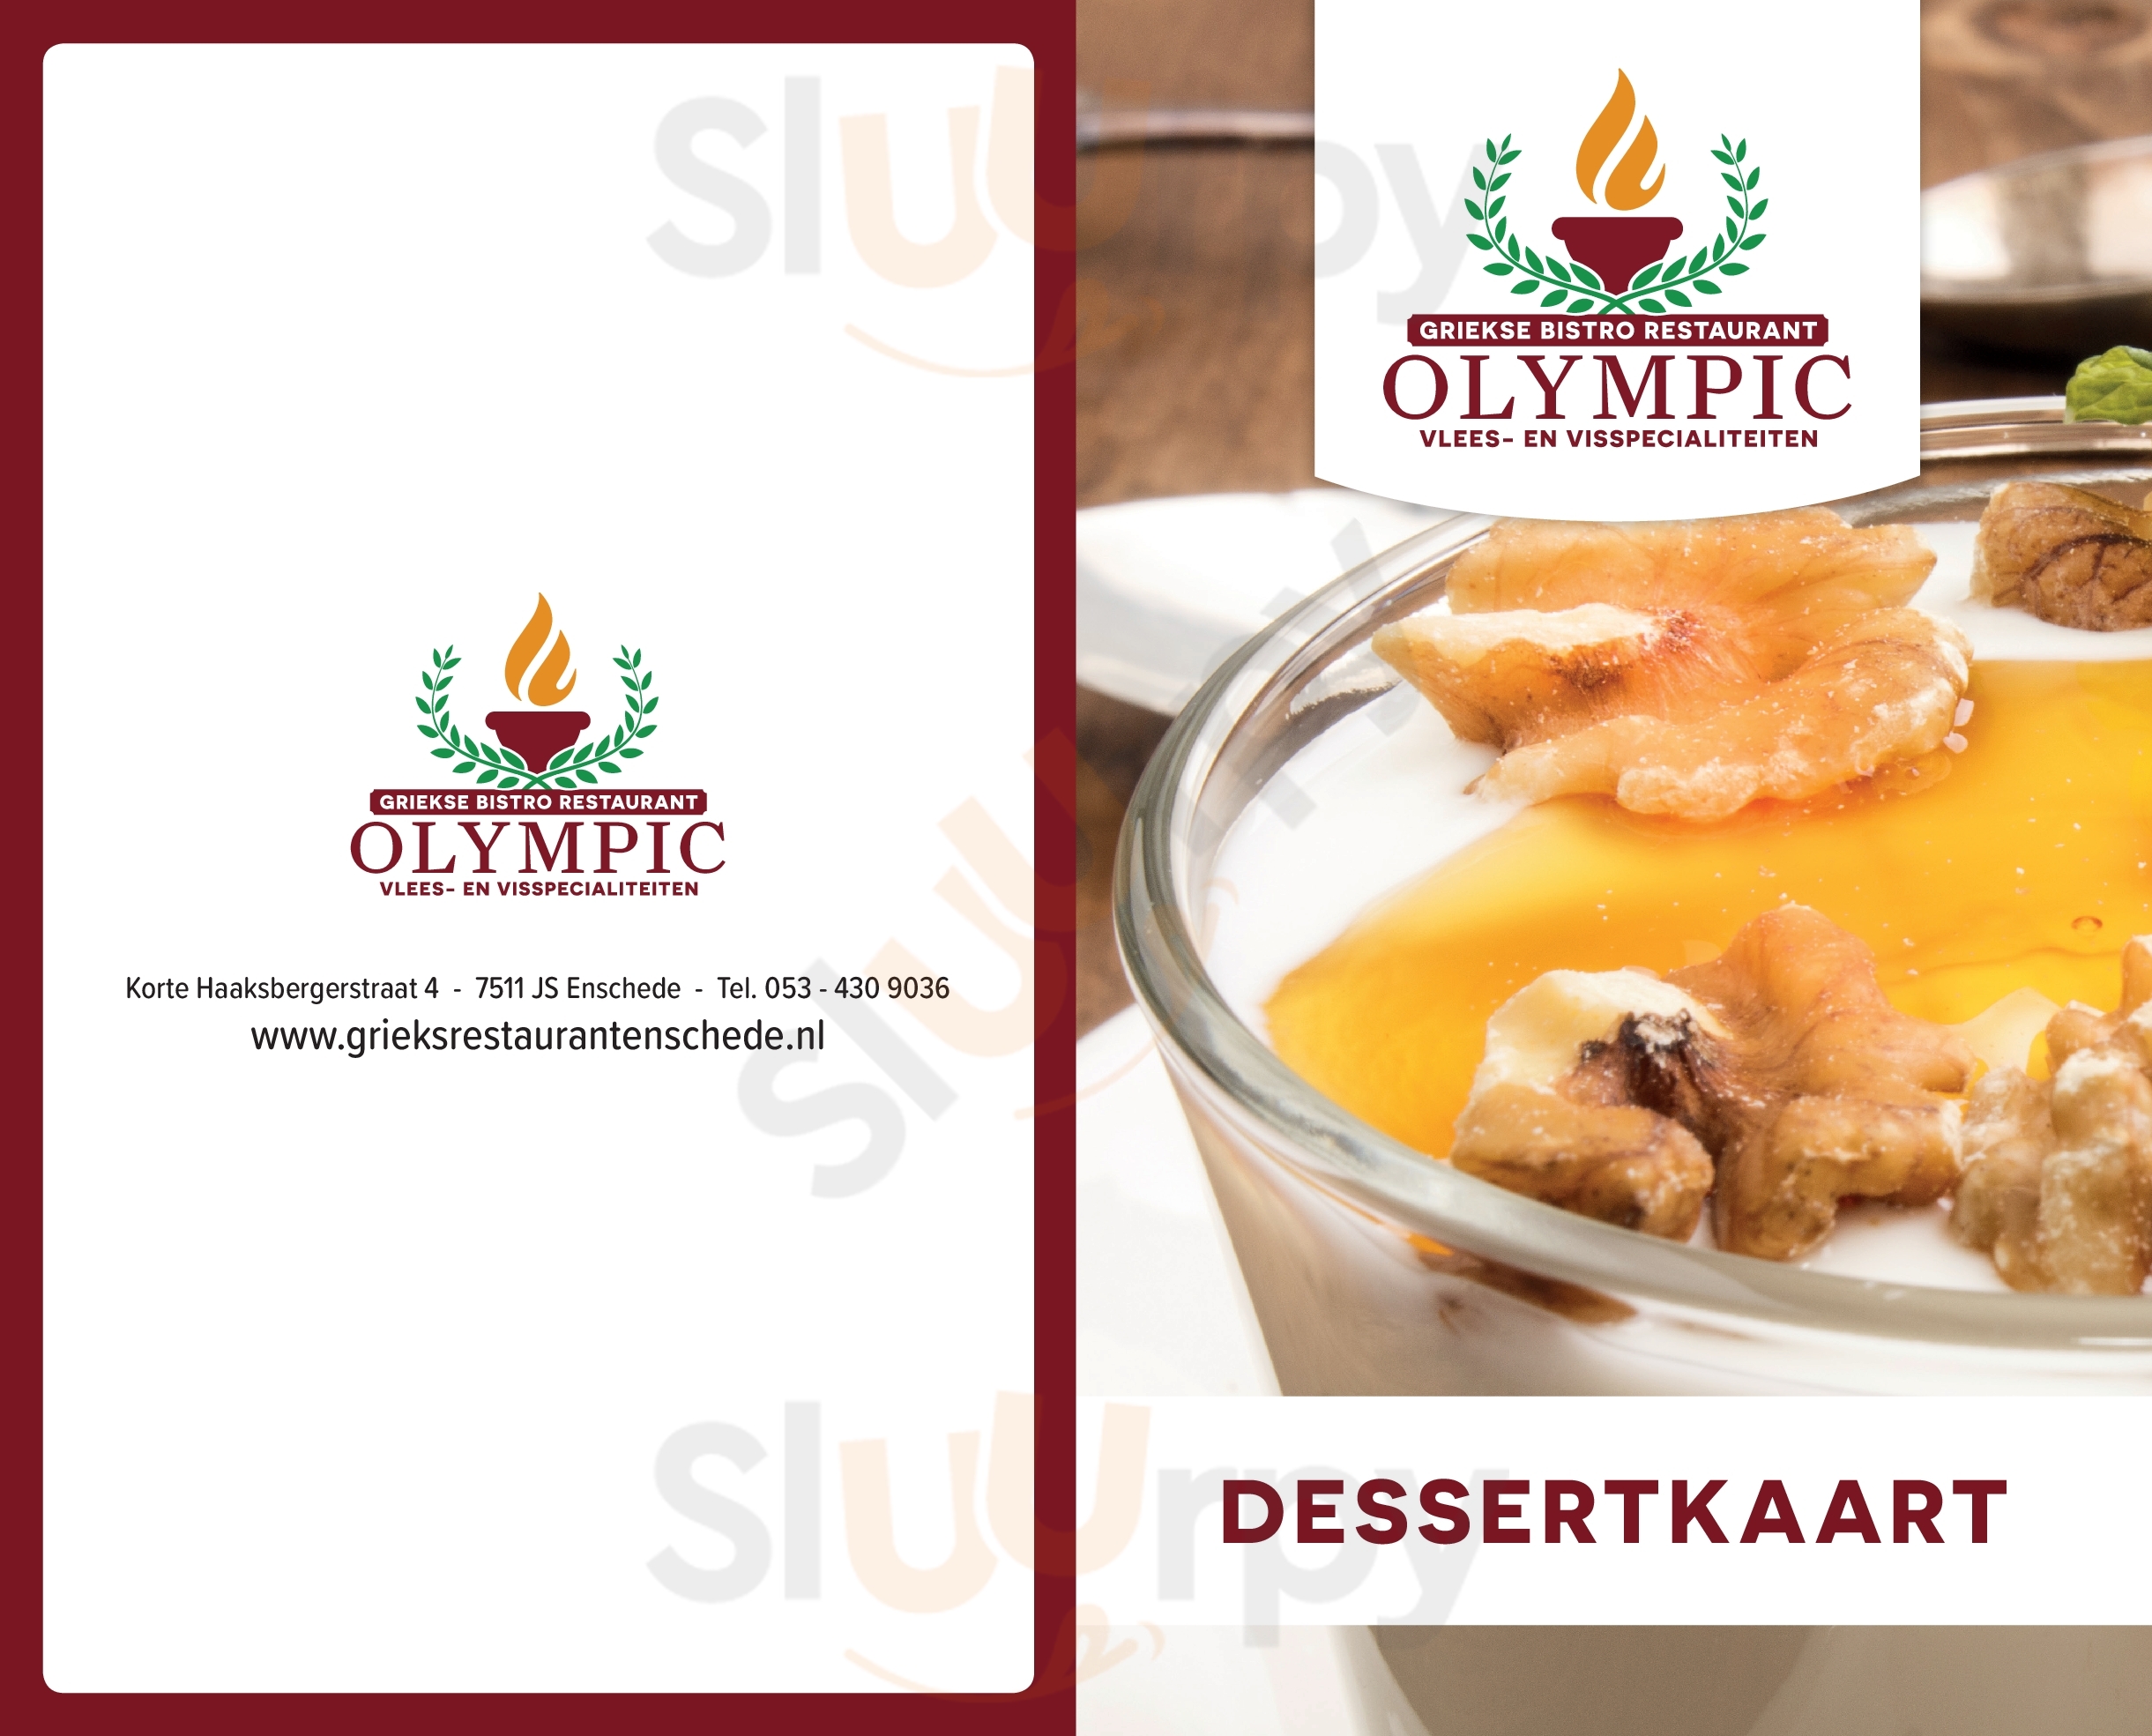 Griekse Bistro Restaurant Olympic Enschede Menu - 1